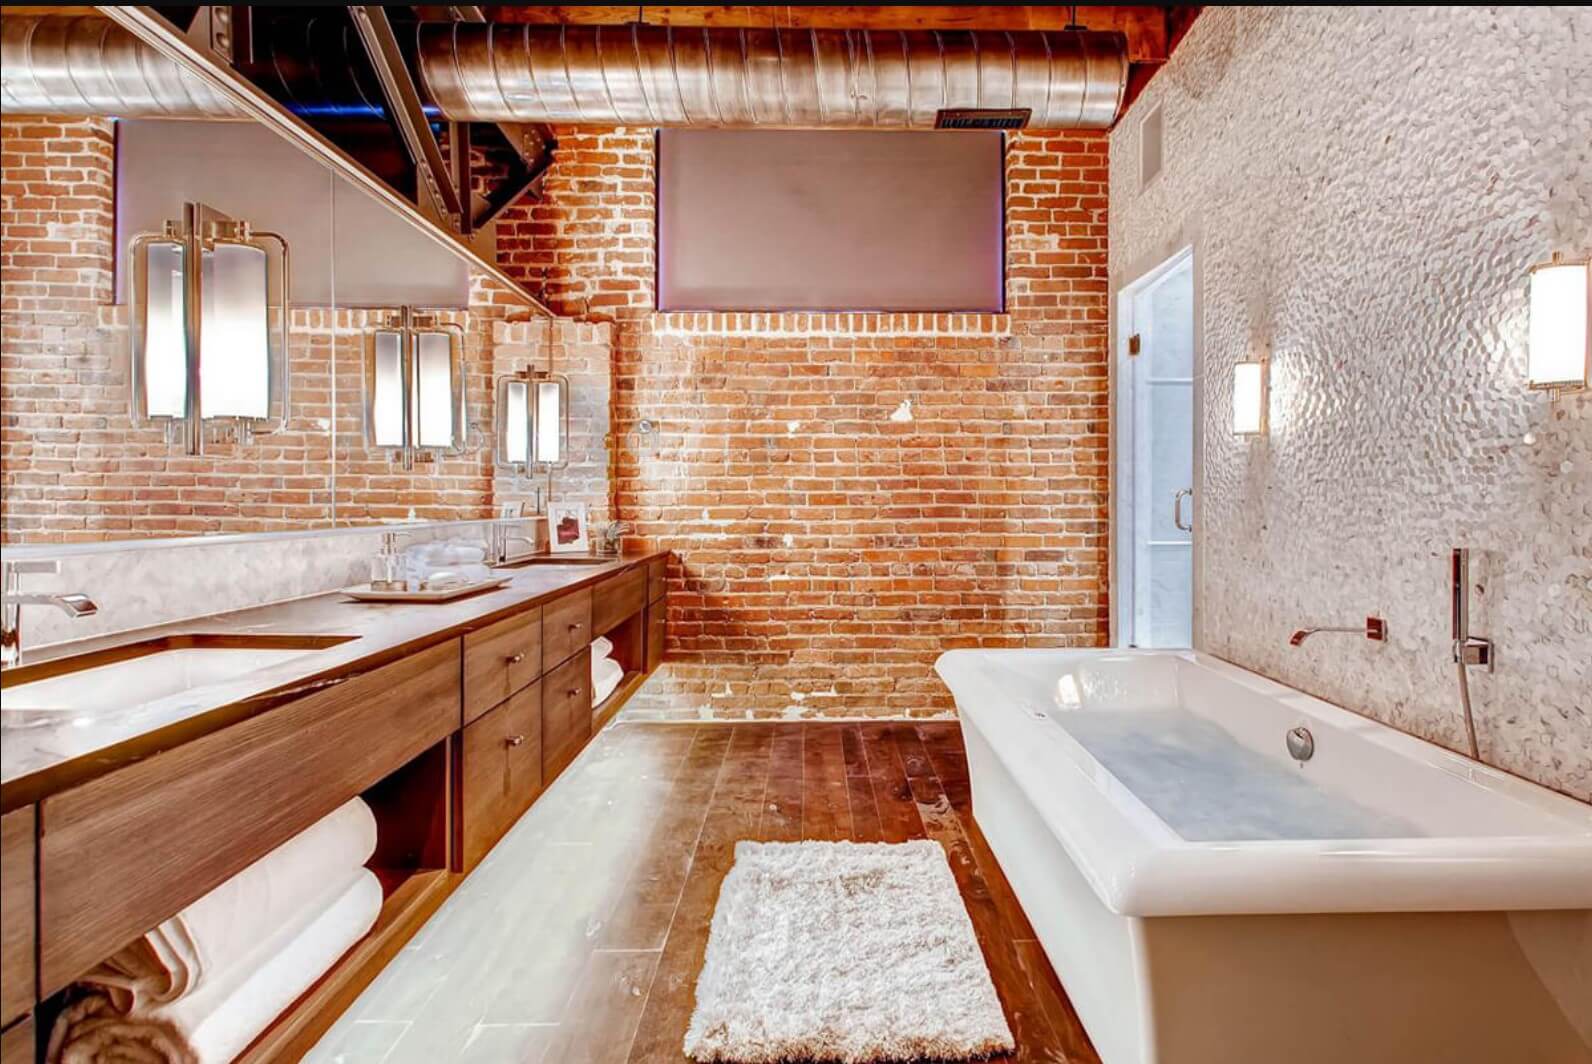 38 rustic master bathroom ideas